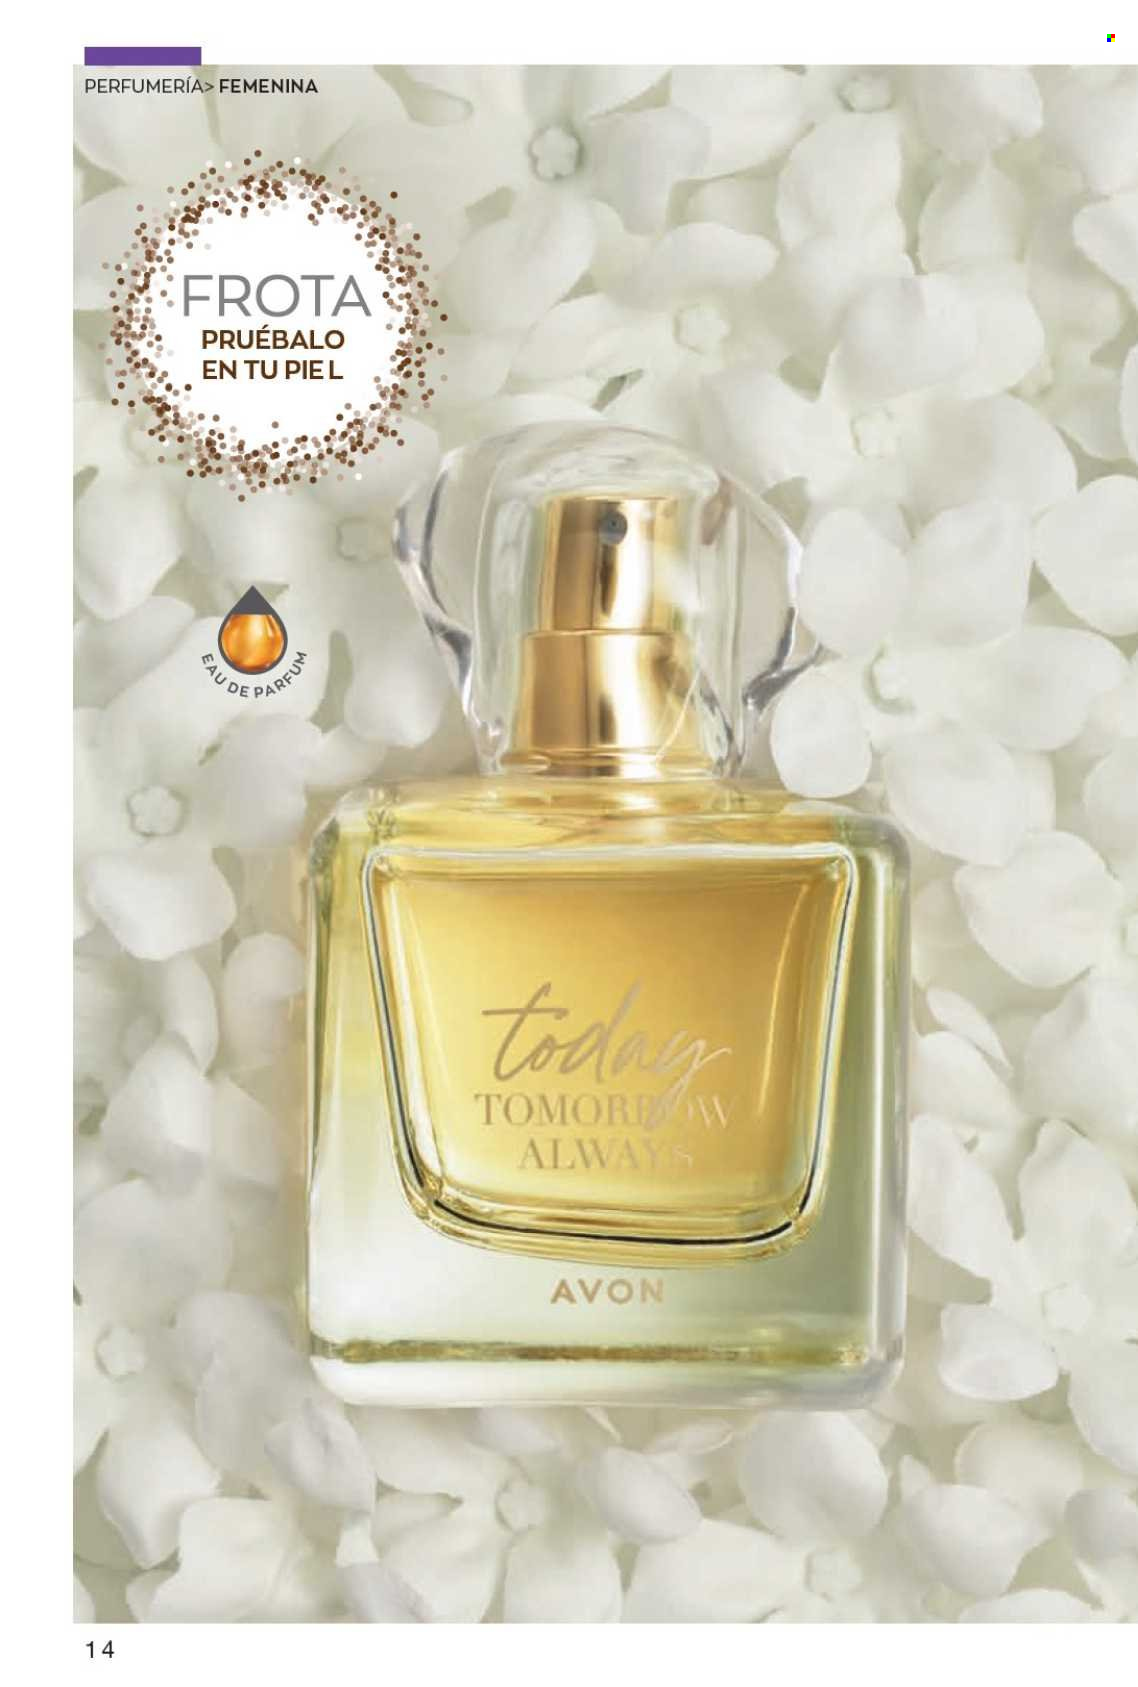 Catálogo Avon - Ventas - perfume. Página 14.